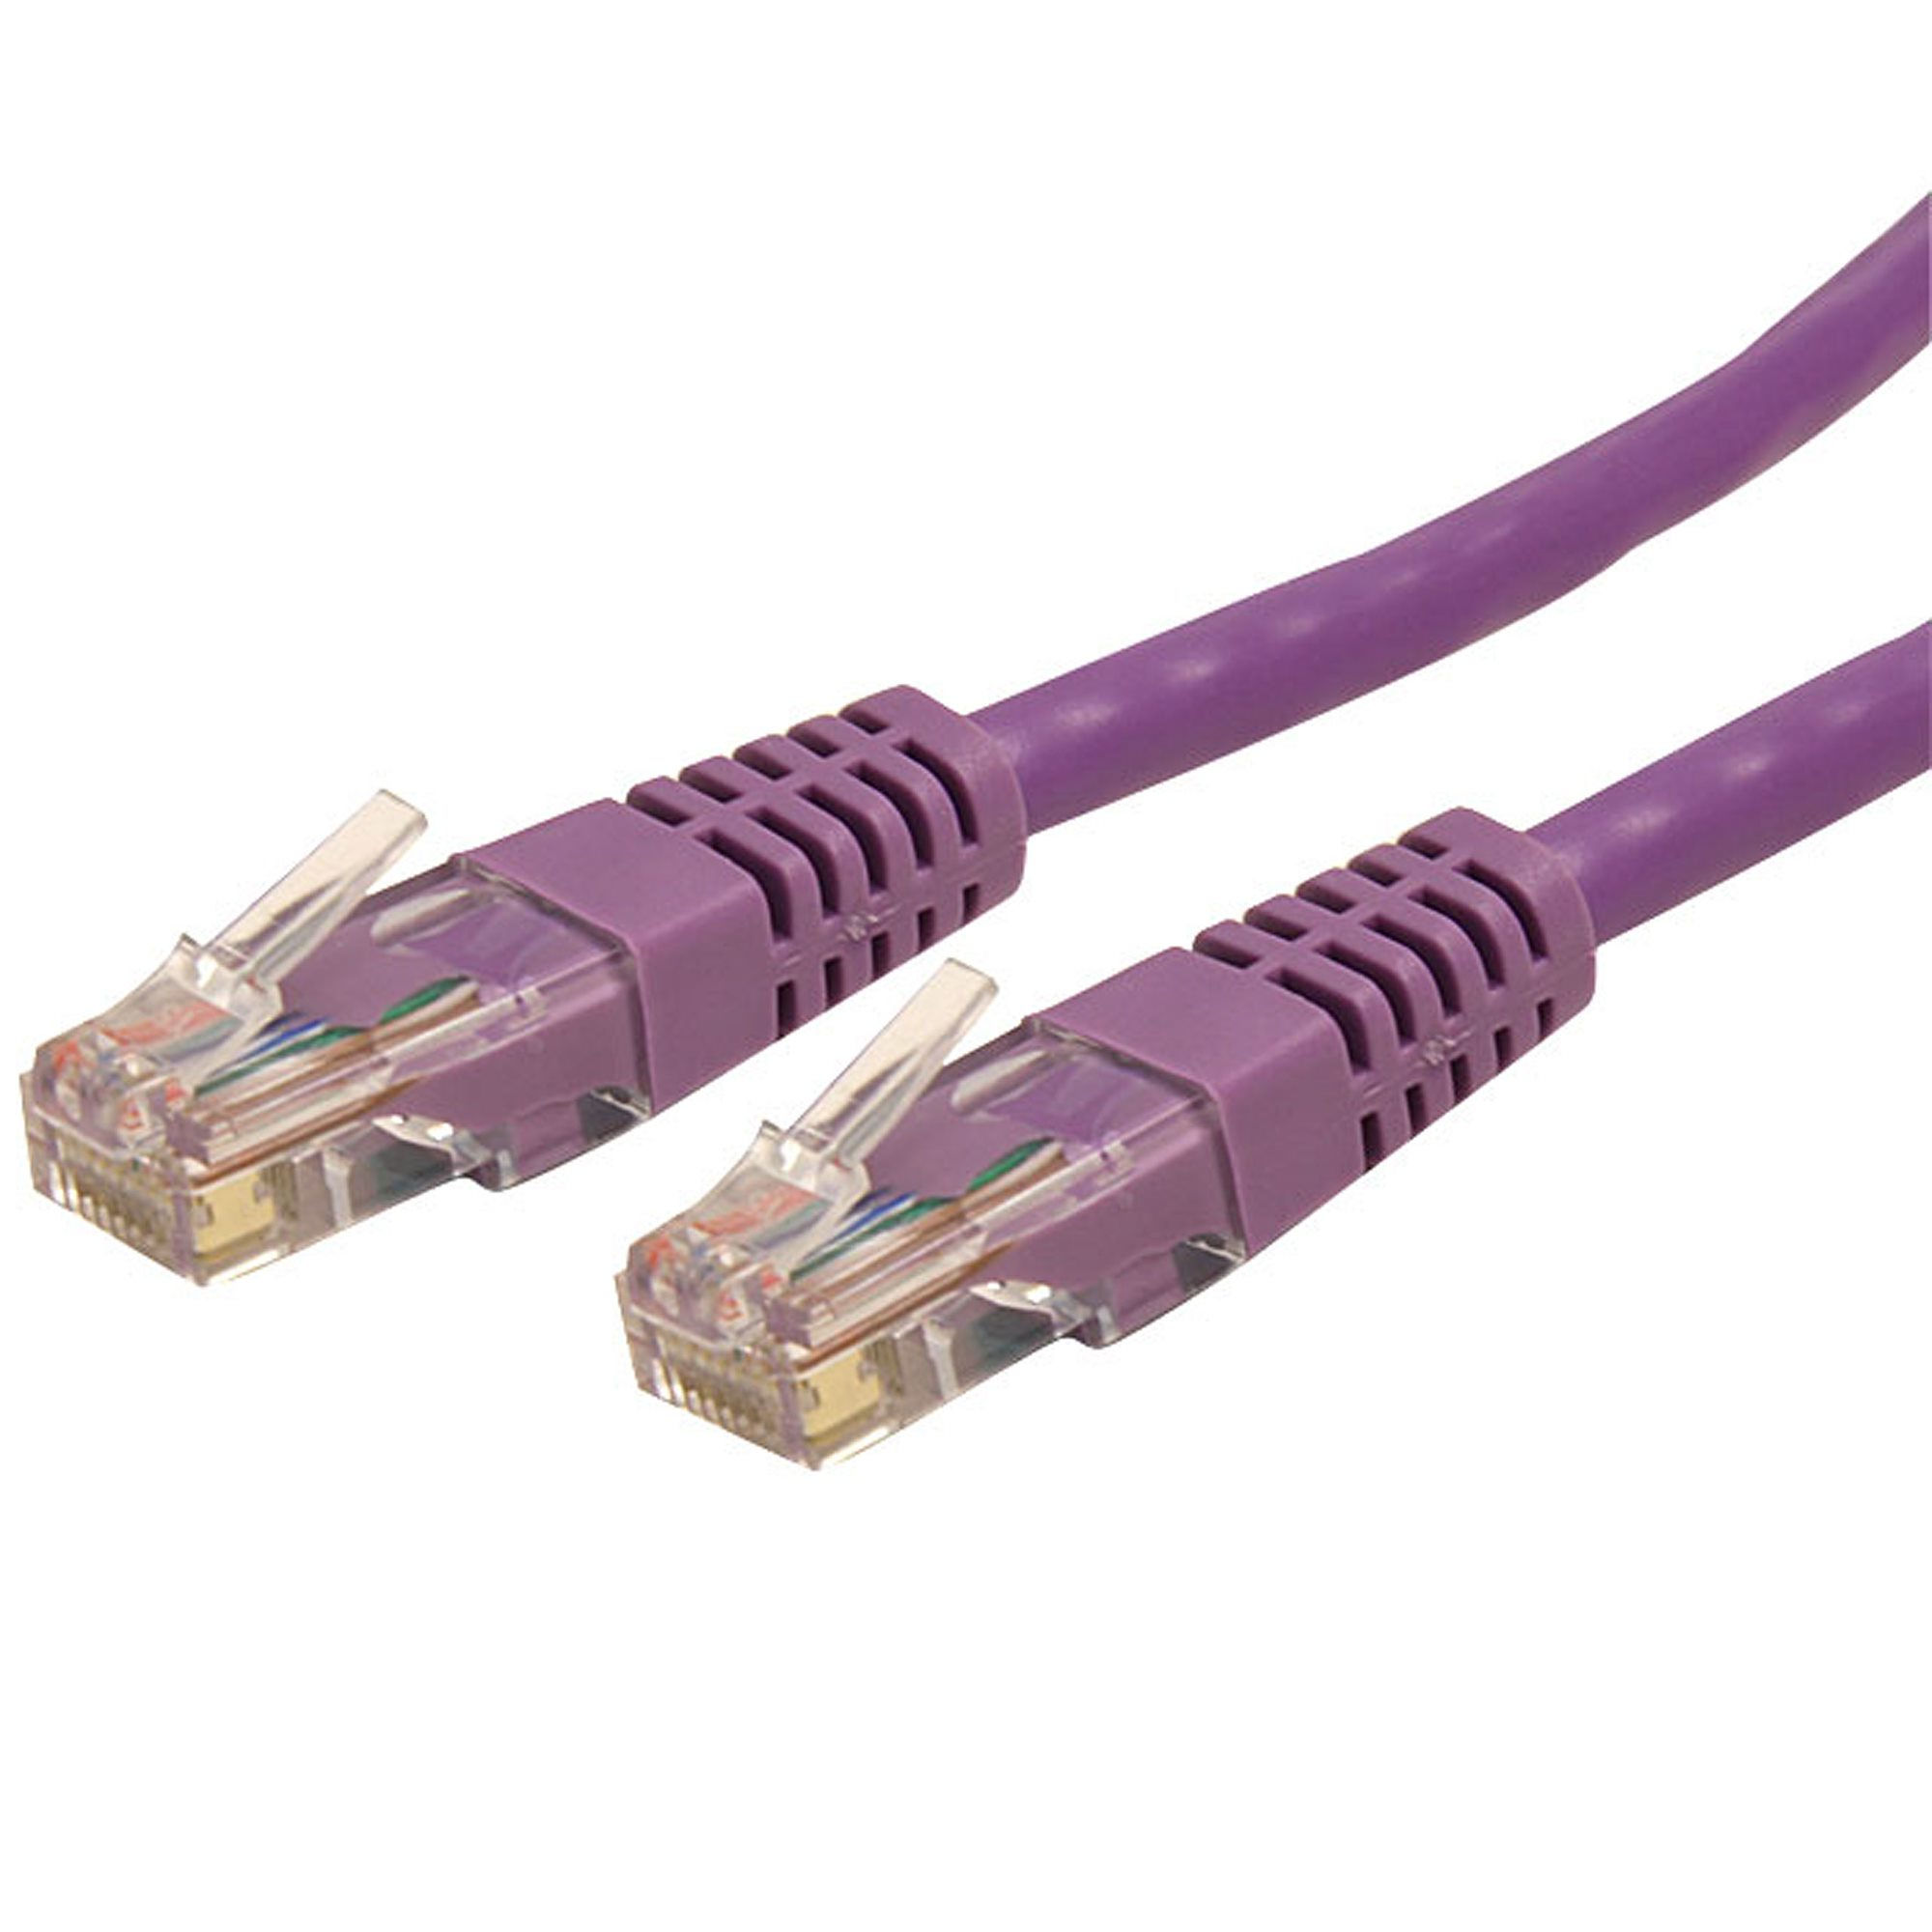 Cable 7.6M Gigabit  Red  Cat6 Utp Rj45  Morado  Startech C6Patch25Pl